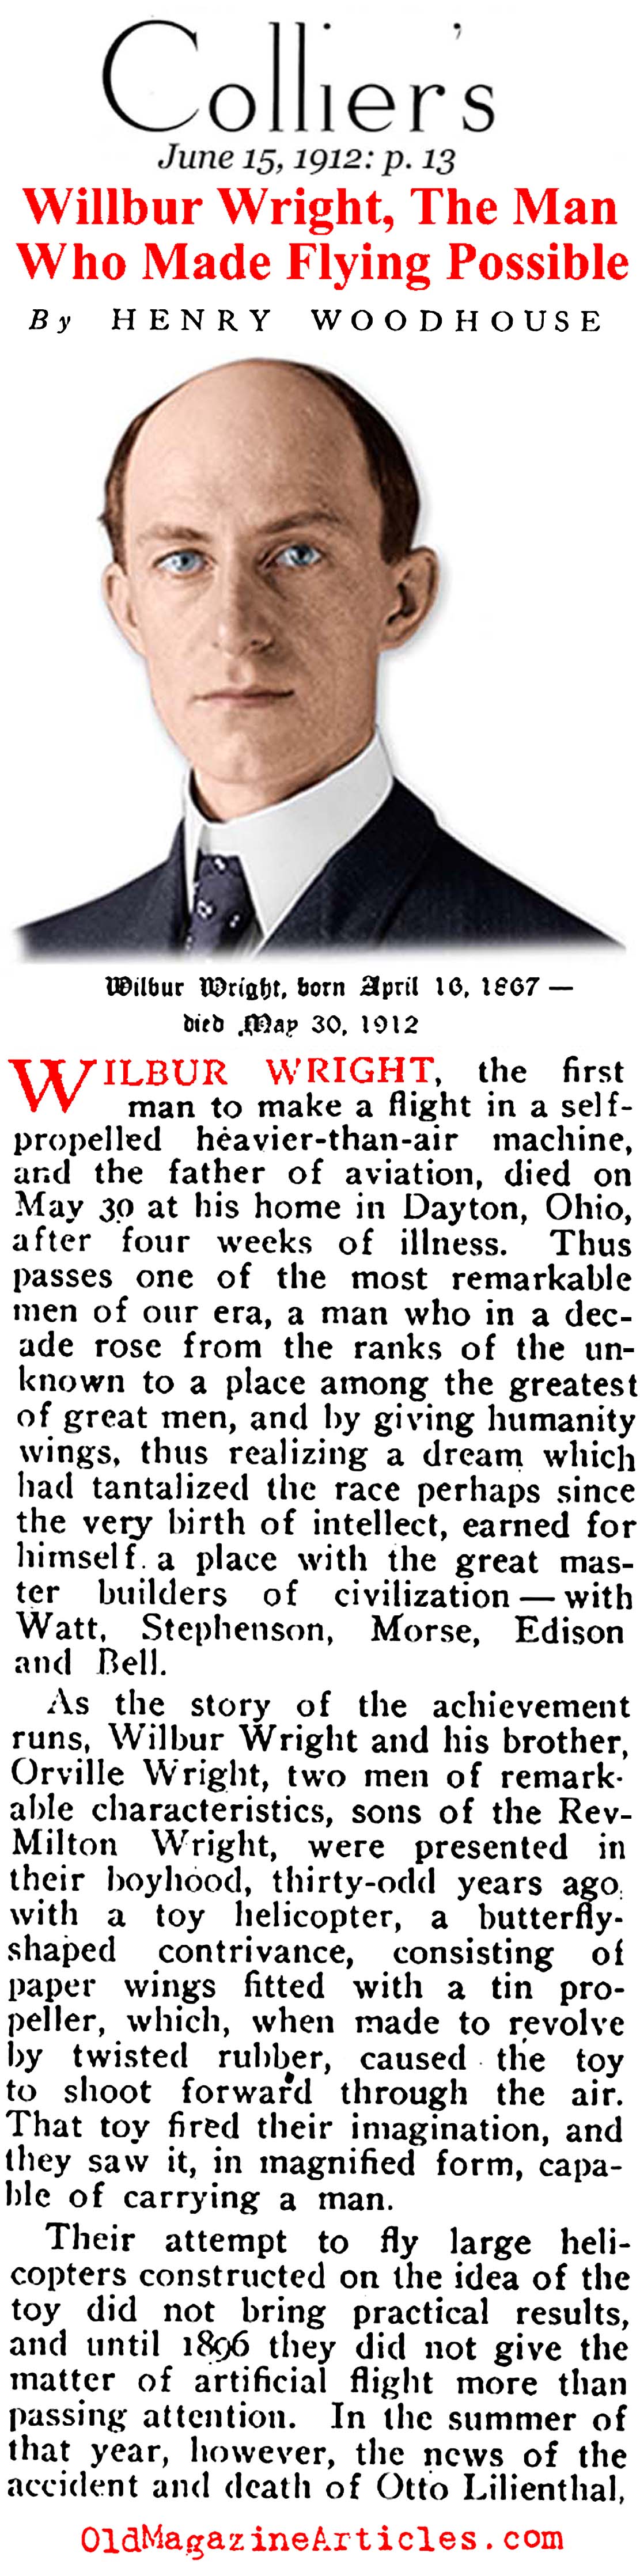 Wilbur Wright, R.I.P. (Collier's, 1912)